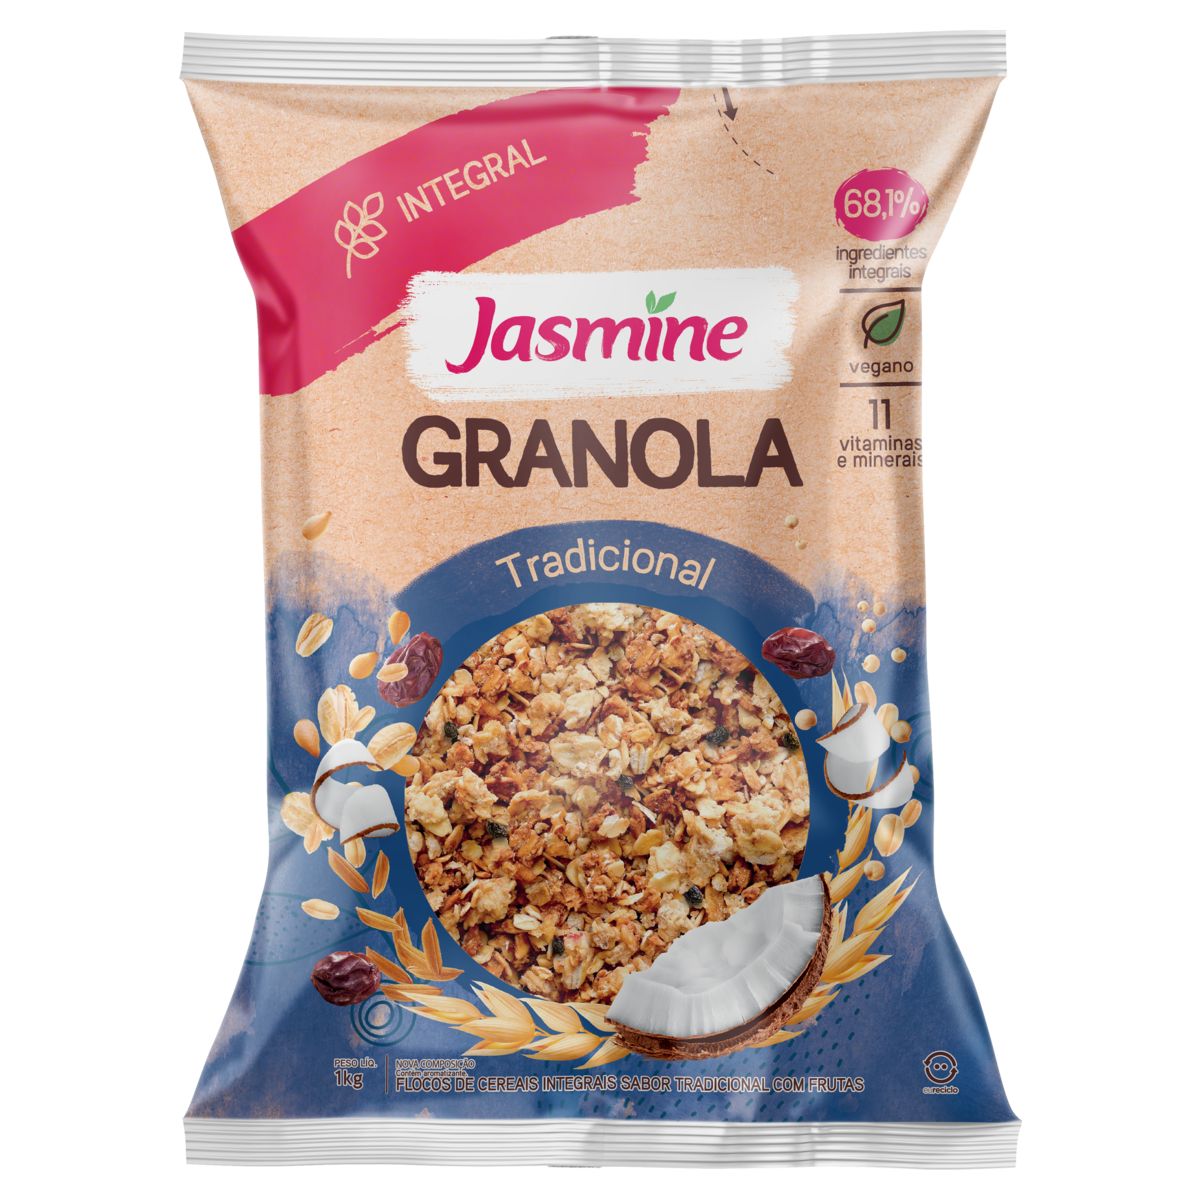 Granola Jasmine 68,1% Integral Tradicional Pacote 1kg